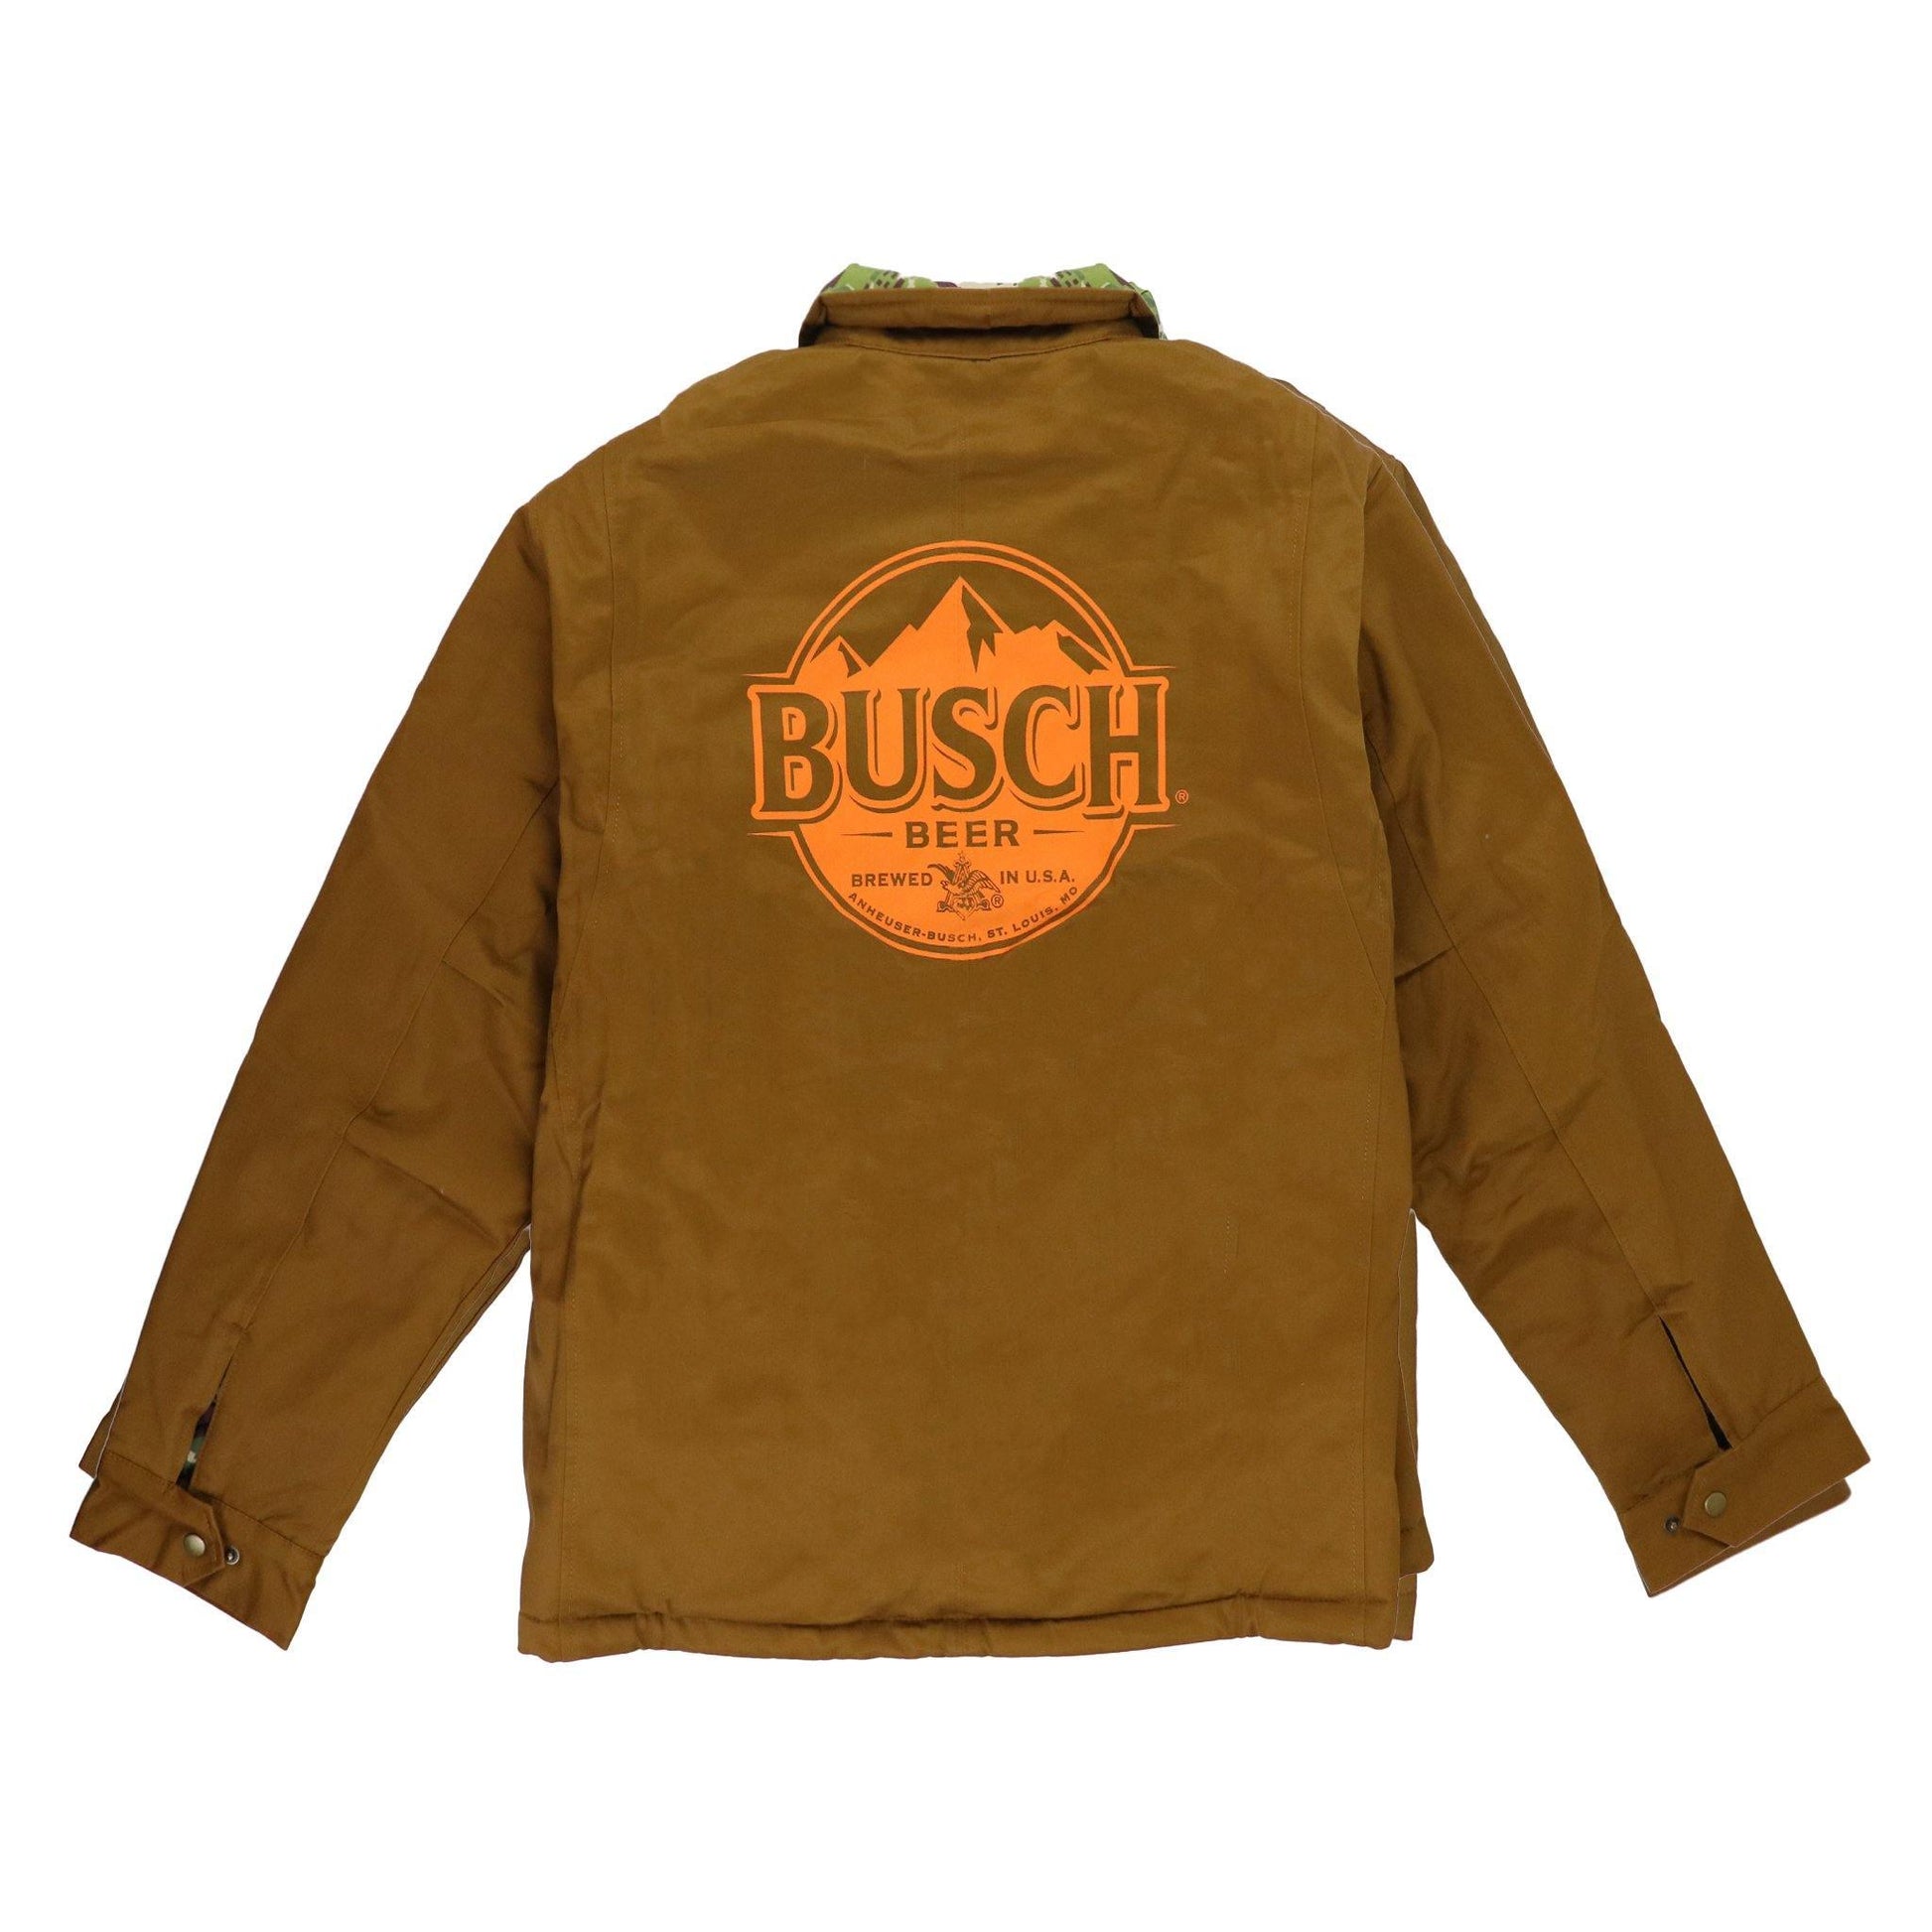 busch camo heavyweight jacket with orange busch logo in left chest area below pocket and orange busch logo on the back of jacket